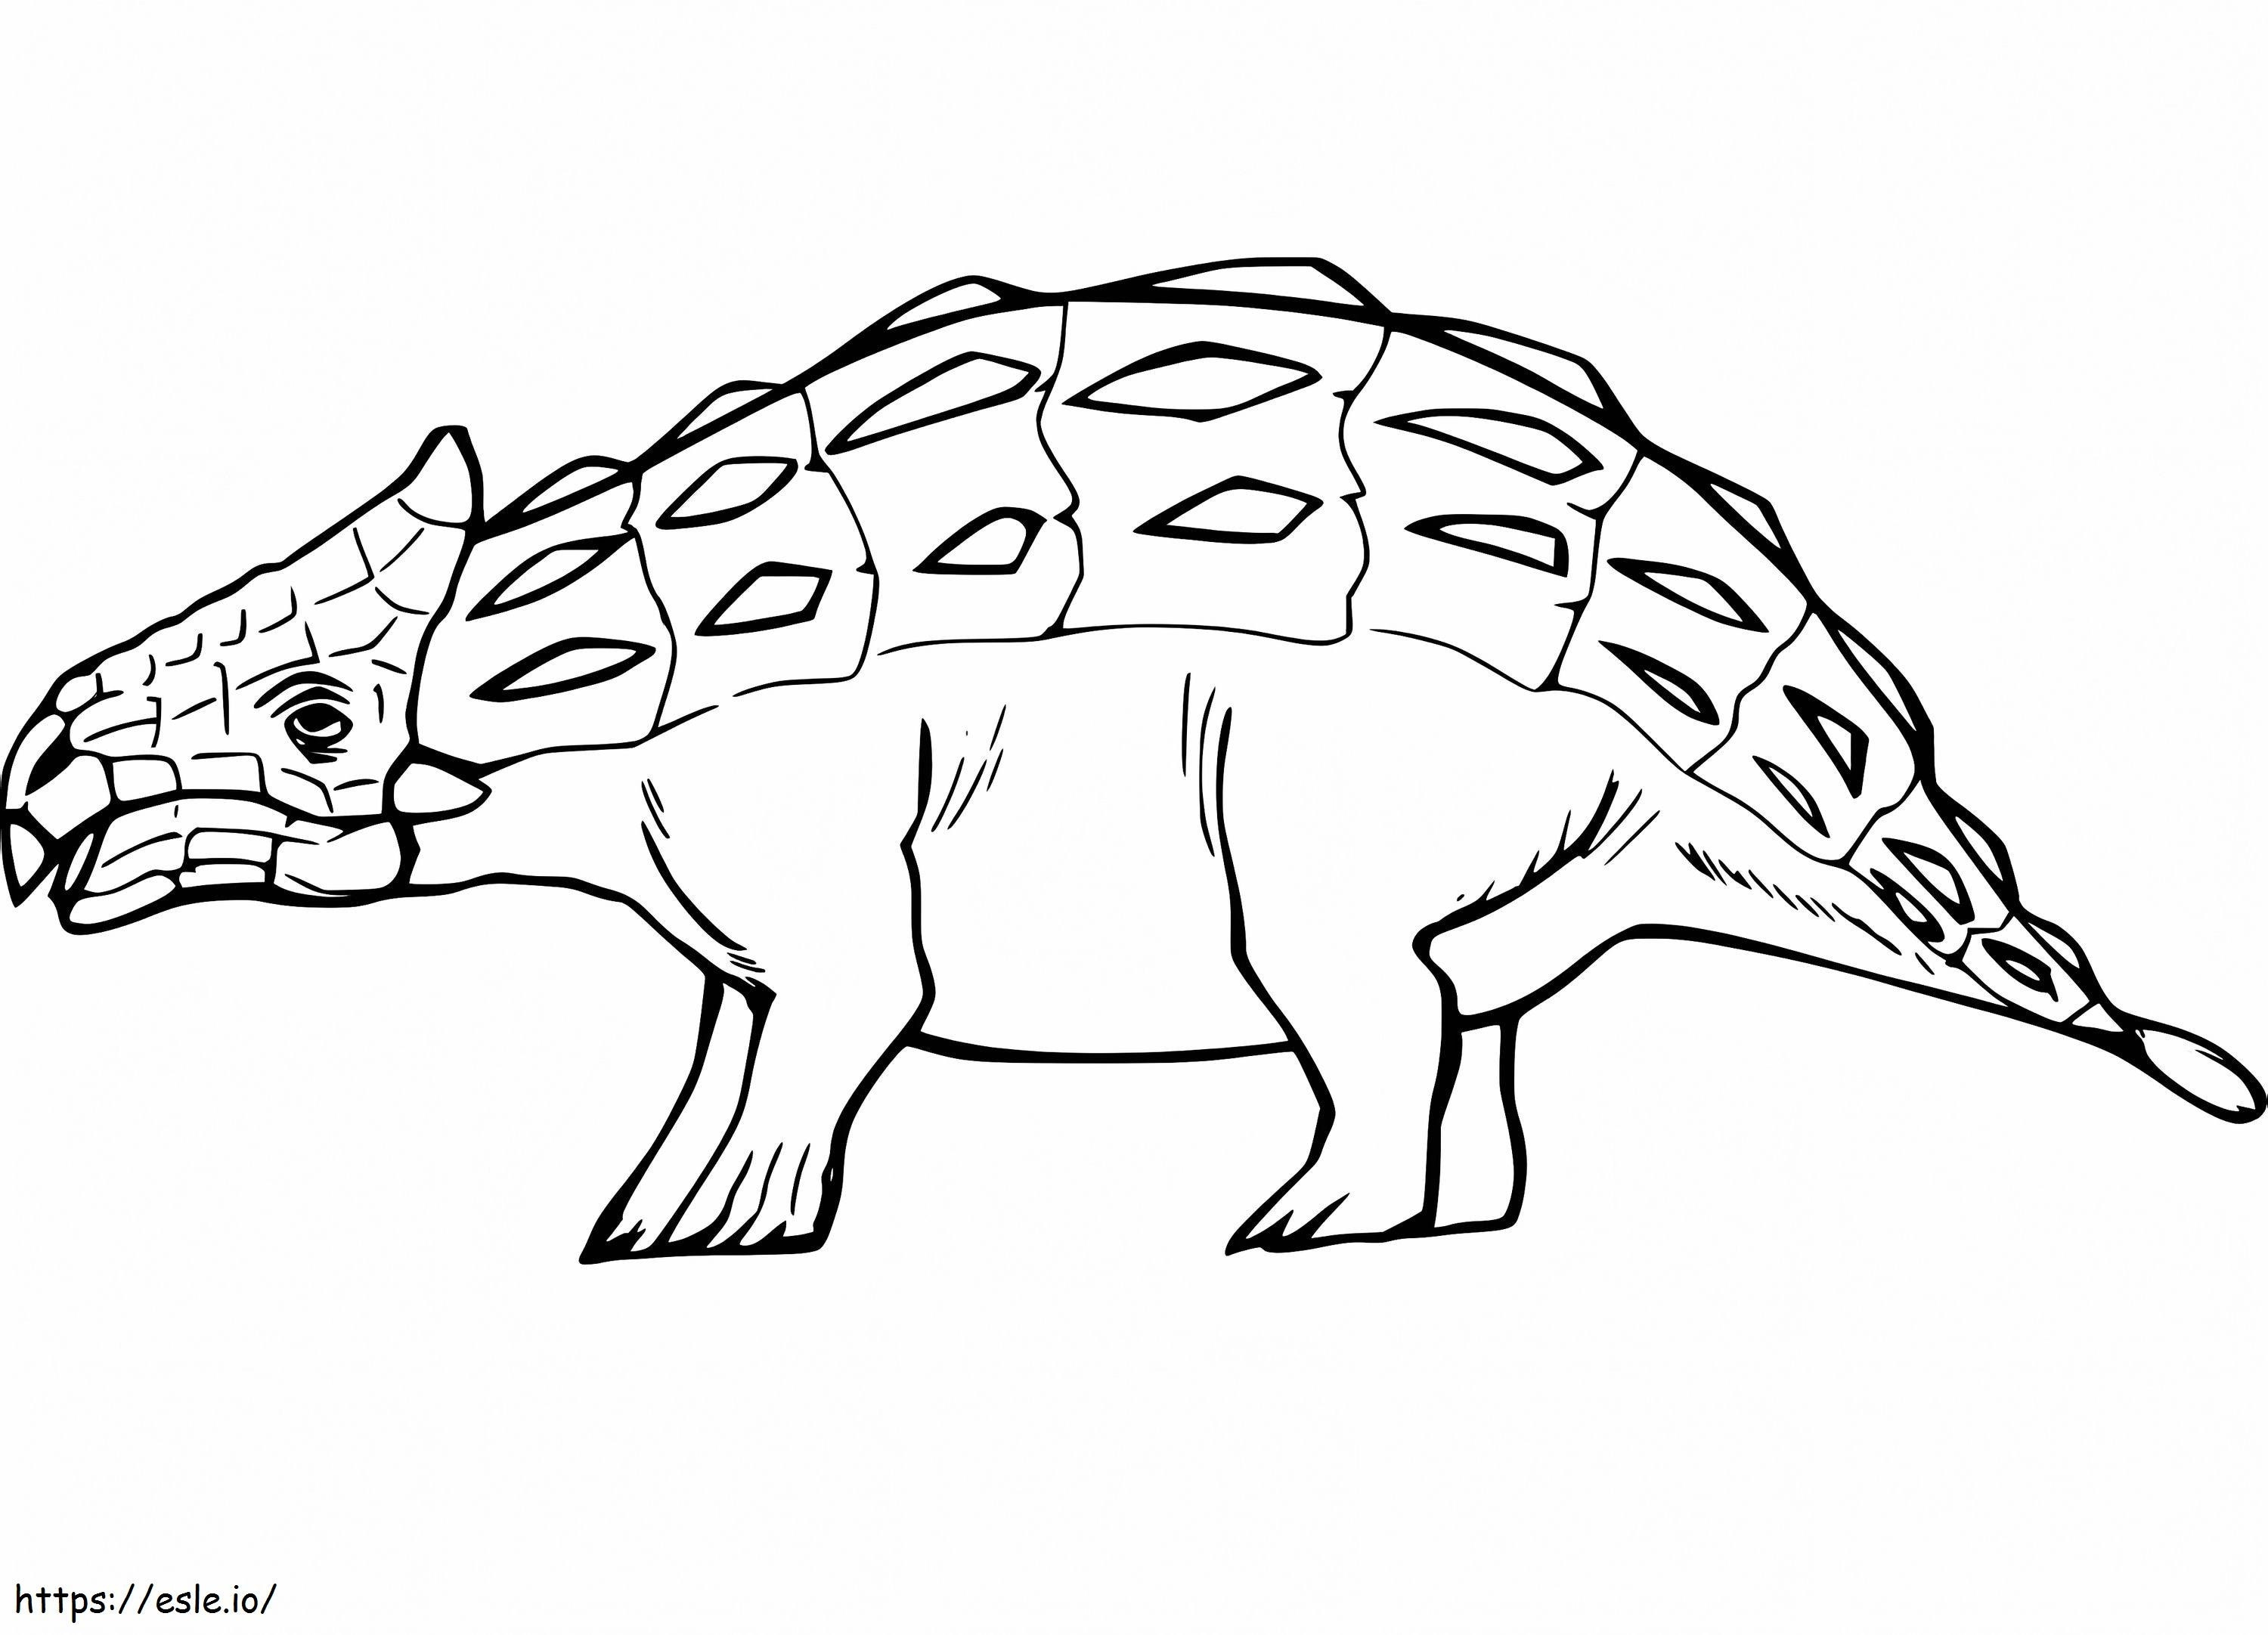 Old Ankylosaurus coloring page